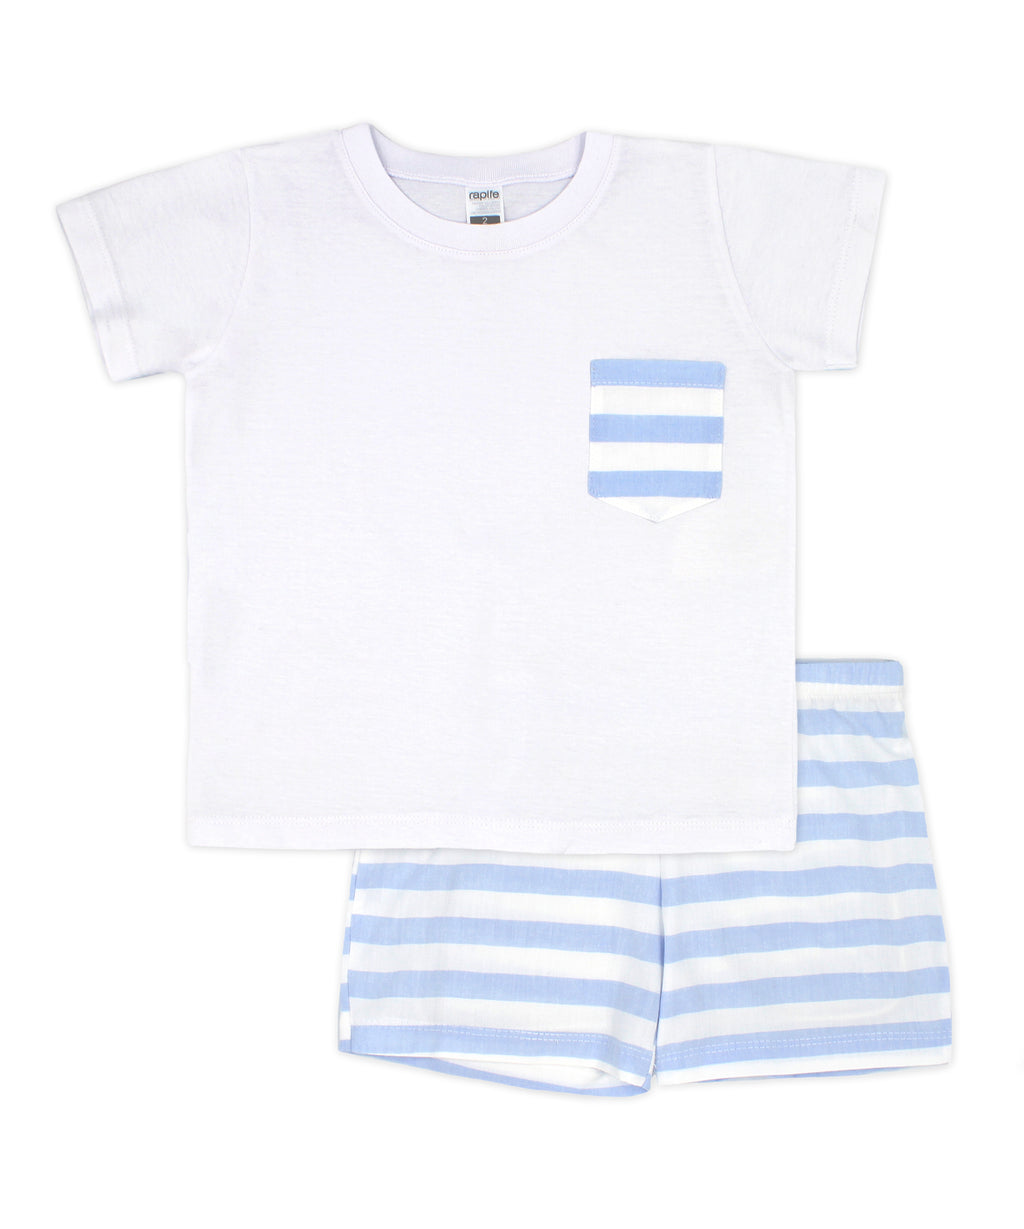 SS24 Rapife White & Blue Stripe Pocket Short Set